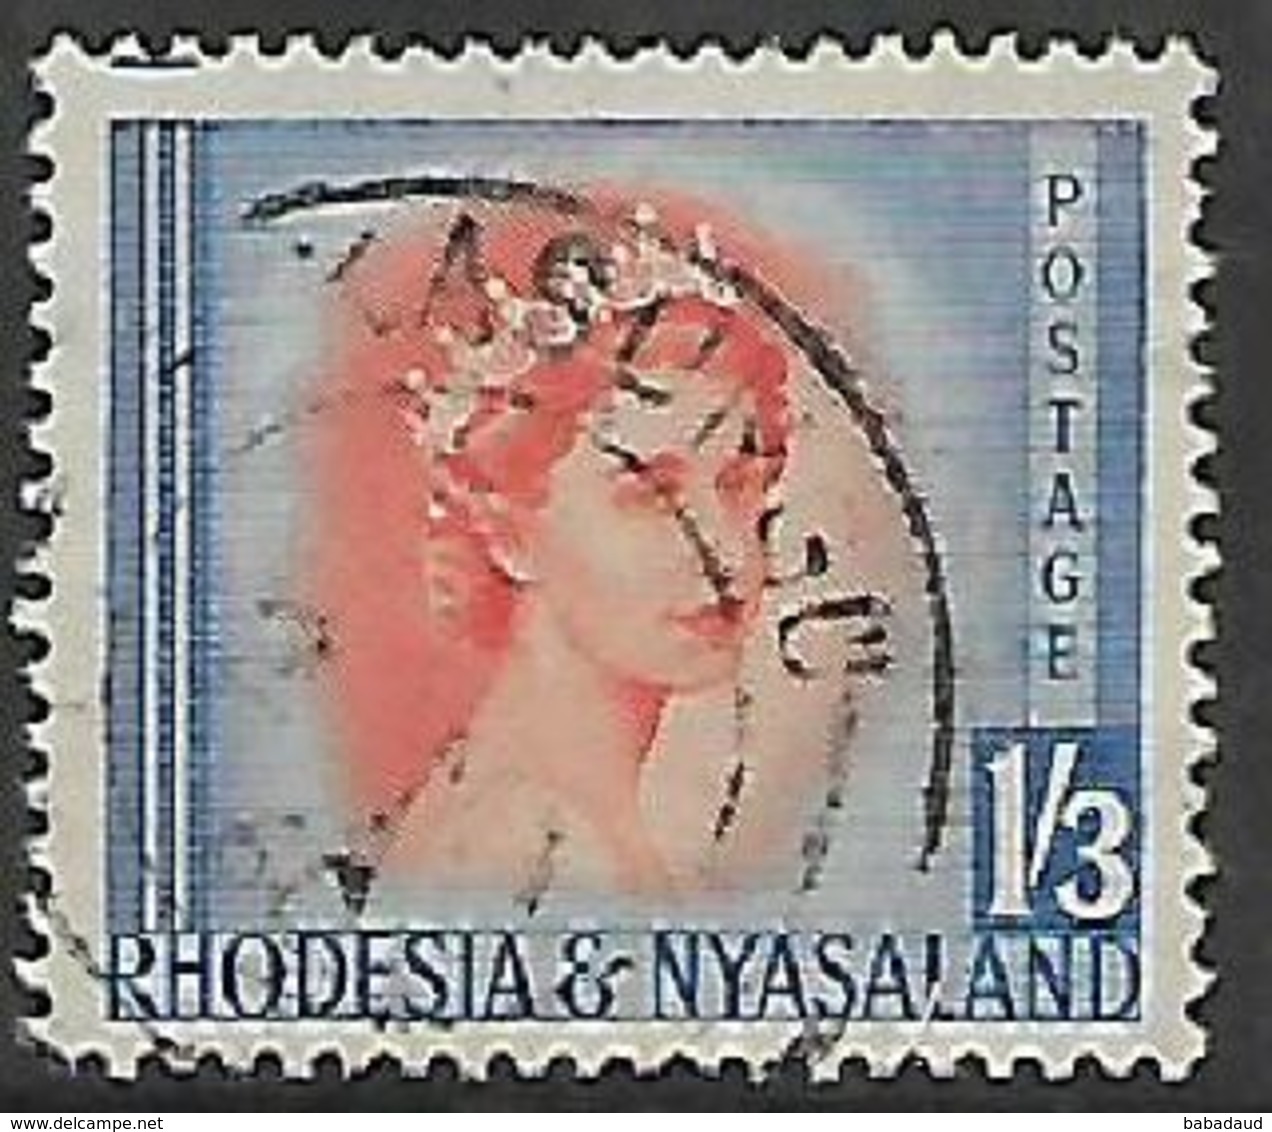 Rhodesia & Nyasaland, KASUNGU 2 MY 60  C.d.s. - Rhodesia & Nyasaland (1954-1963)